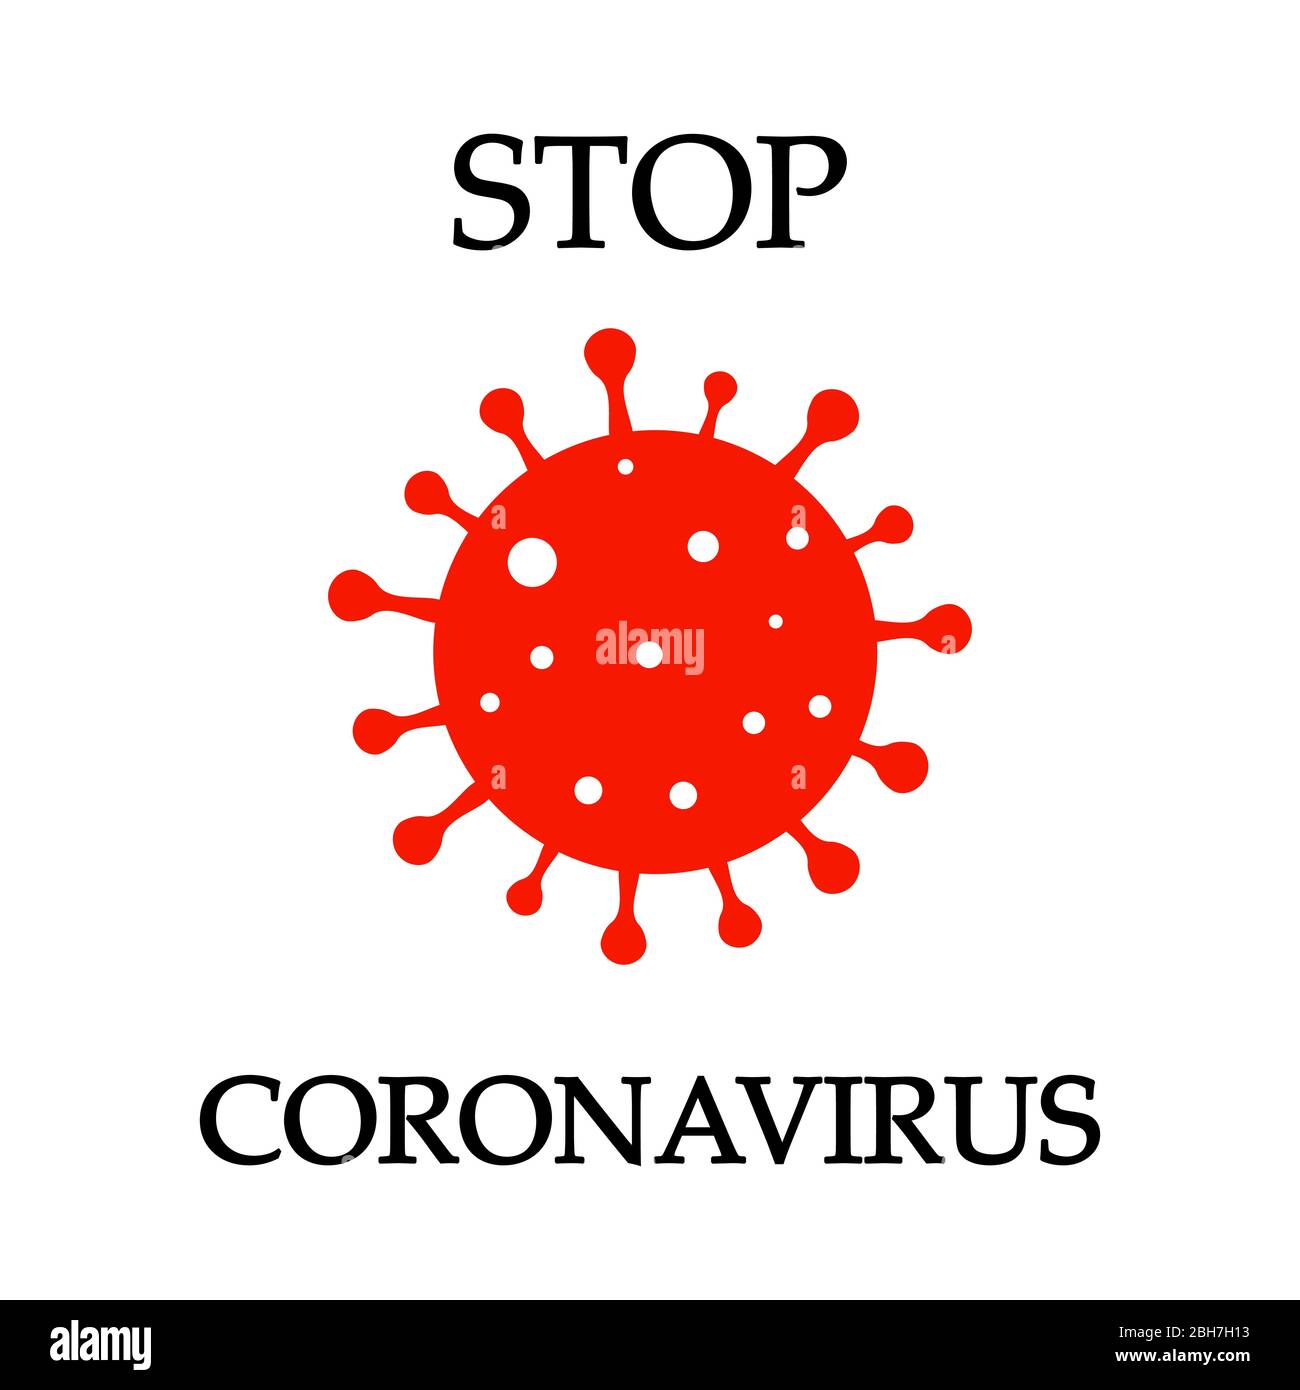 Covid 19 with coronaviruses. Virus symbol on a white background. Stop coronavirus icon Stock Vector